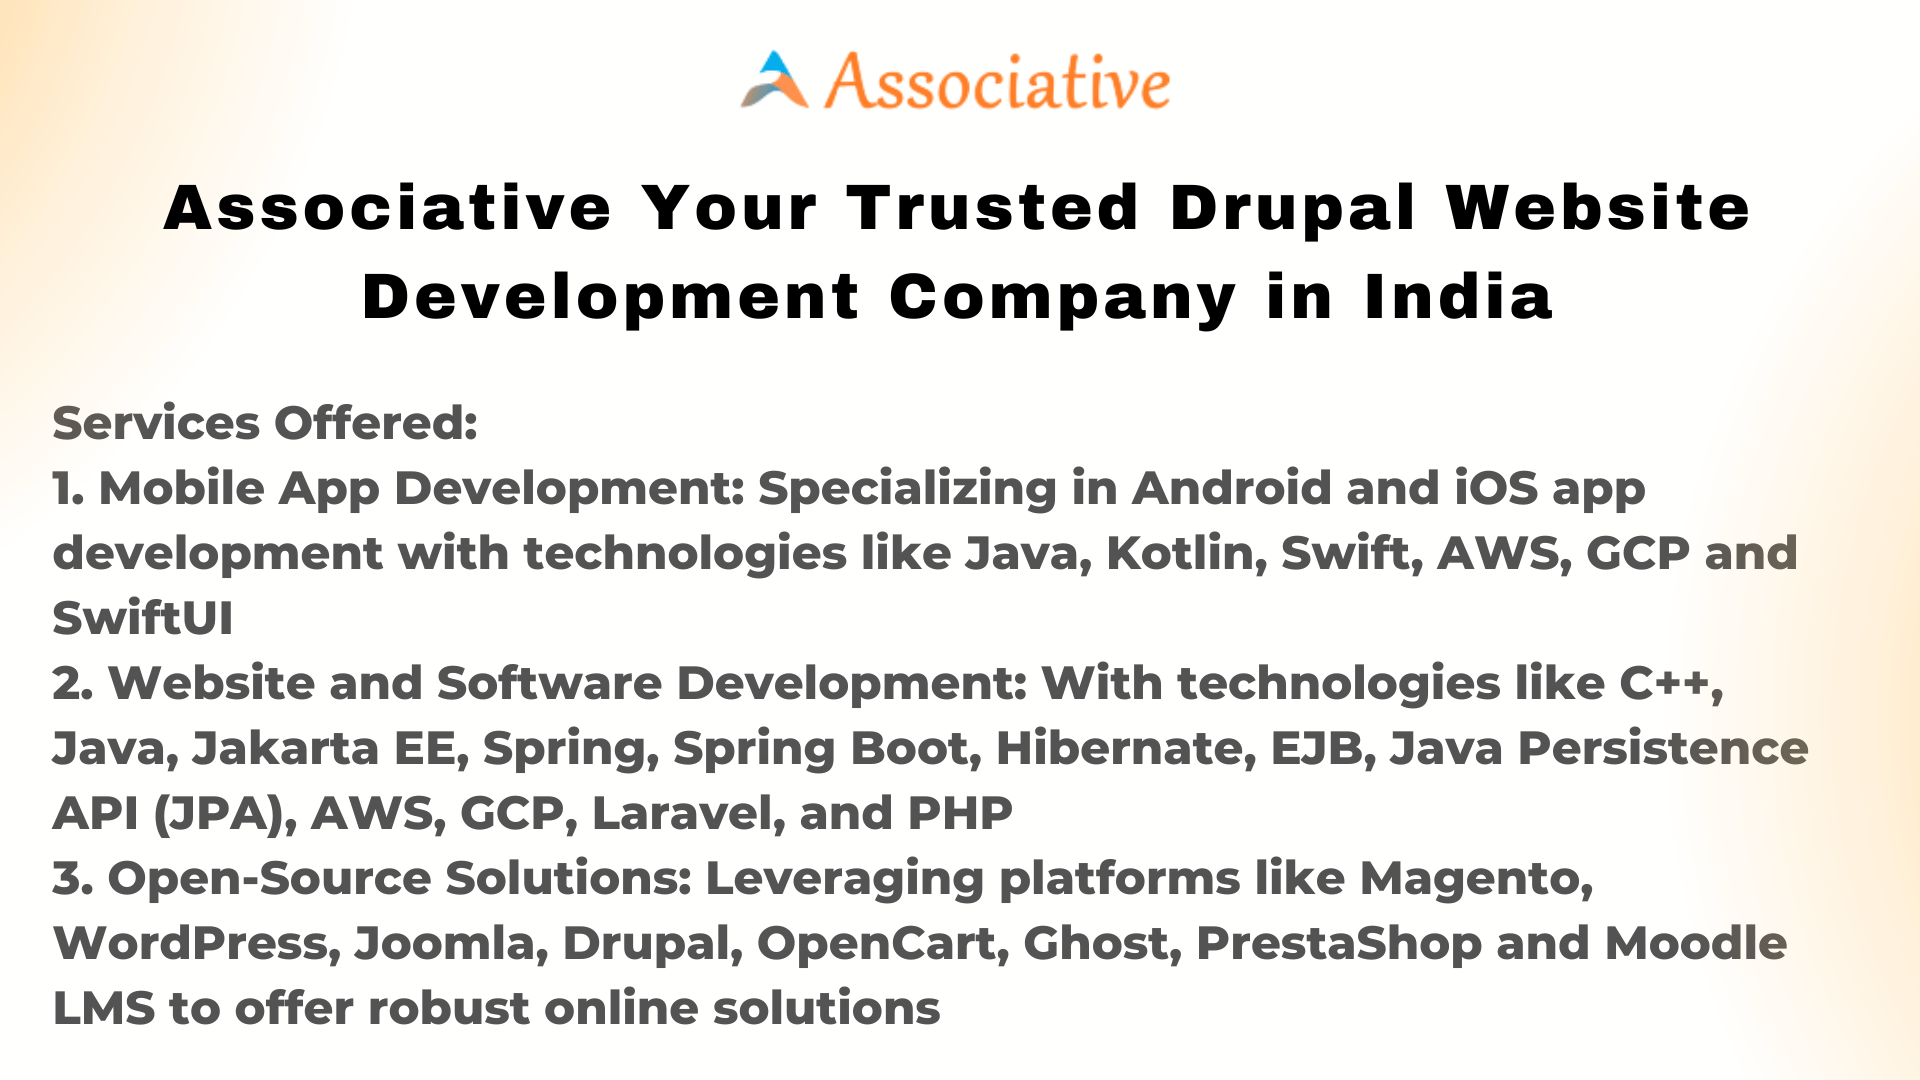 Associative Your Trusted Drupal Website Development Company